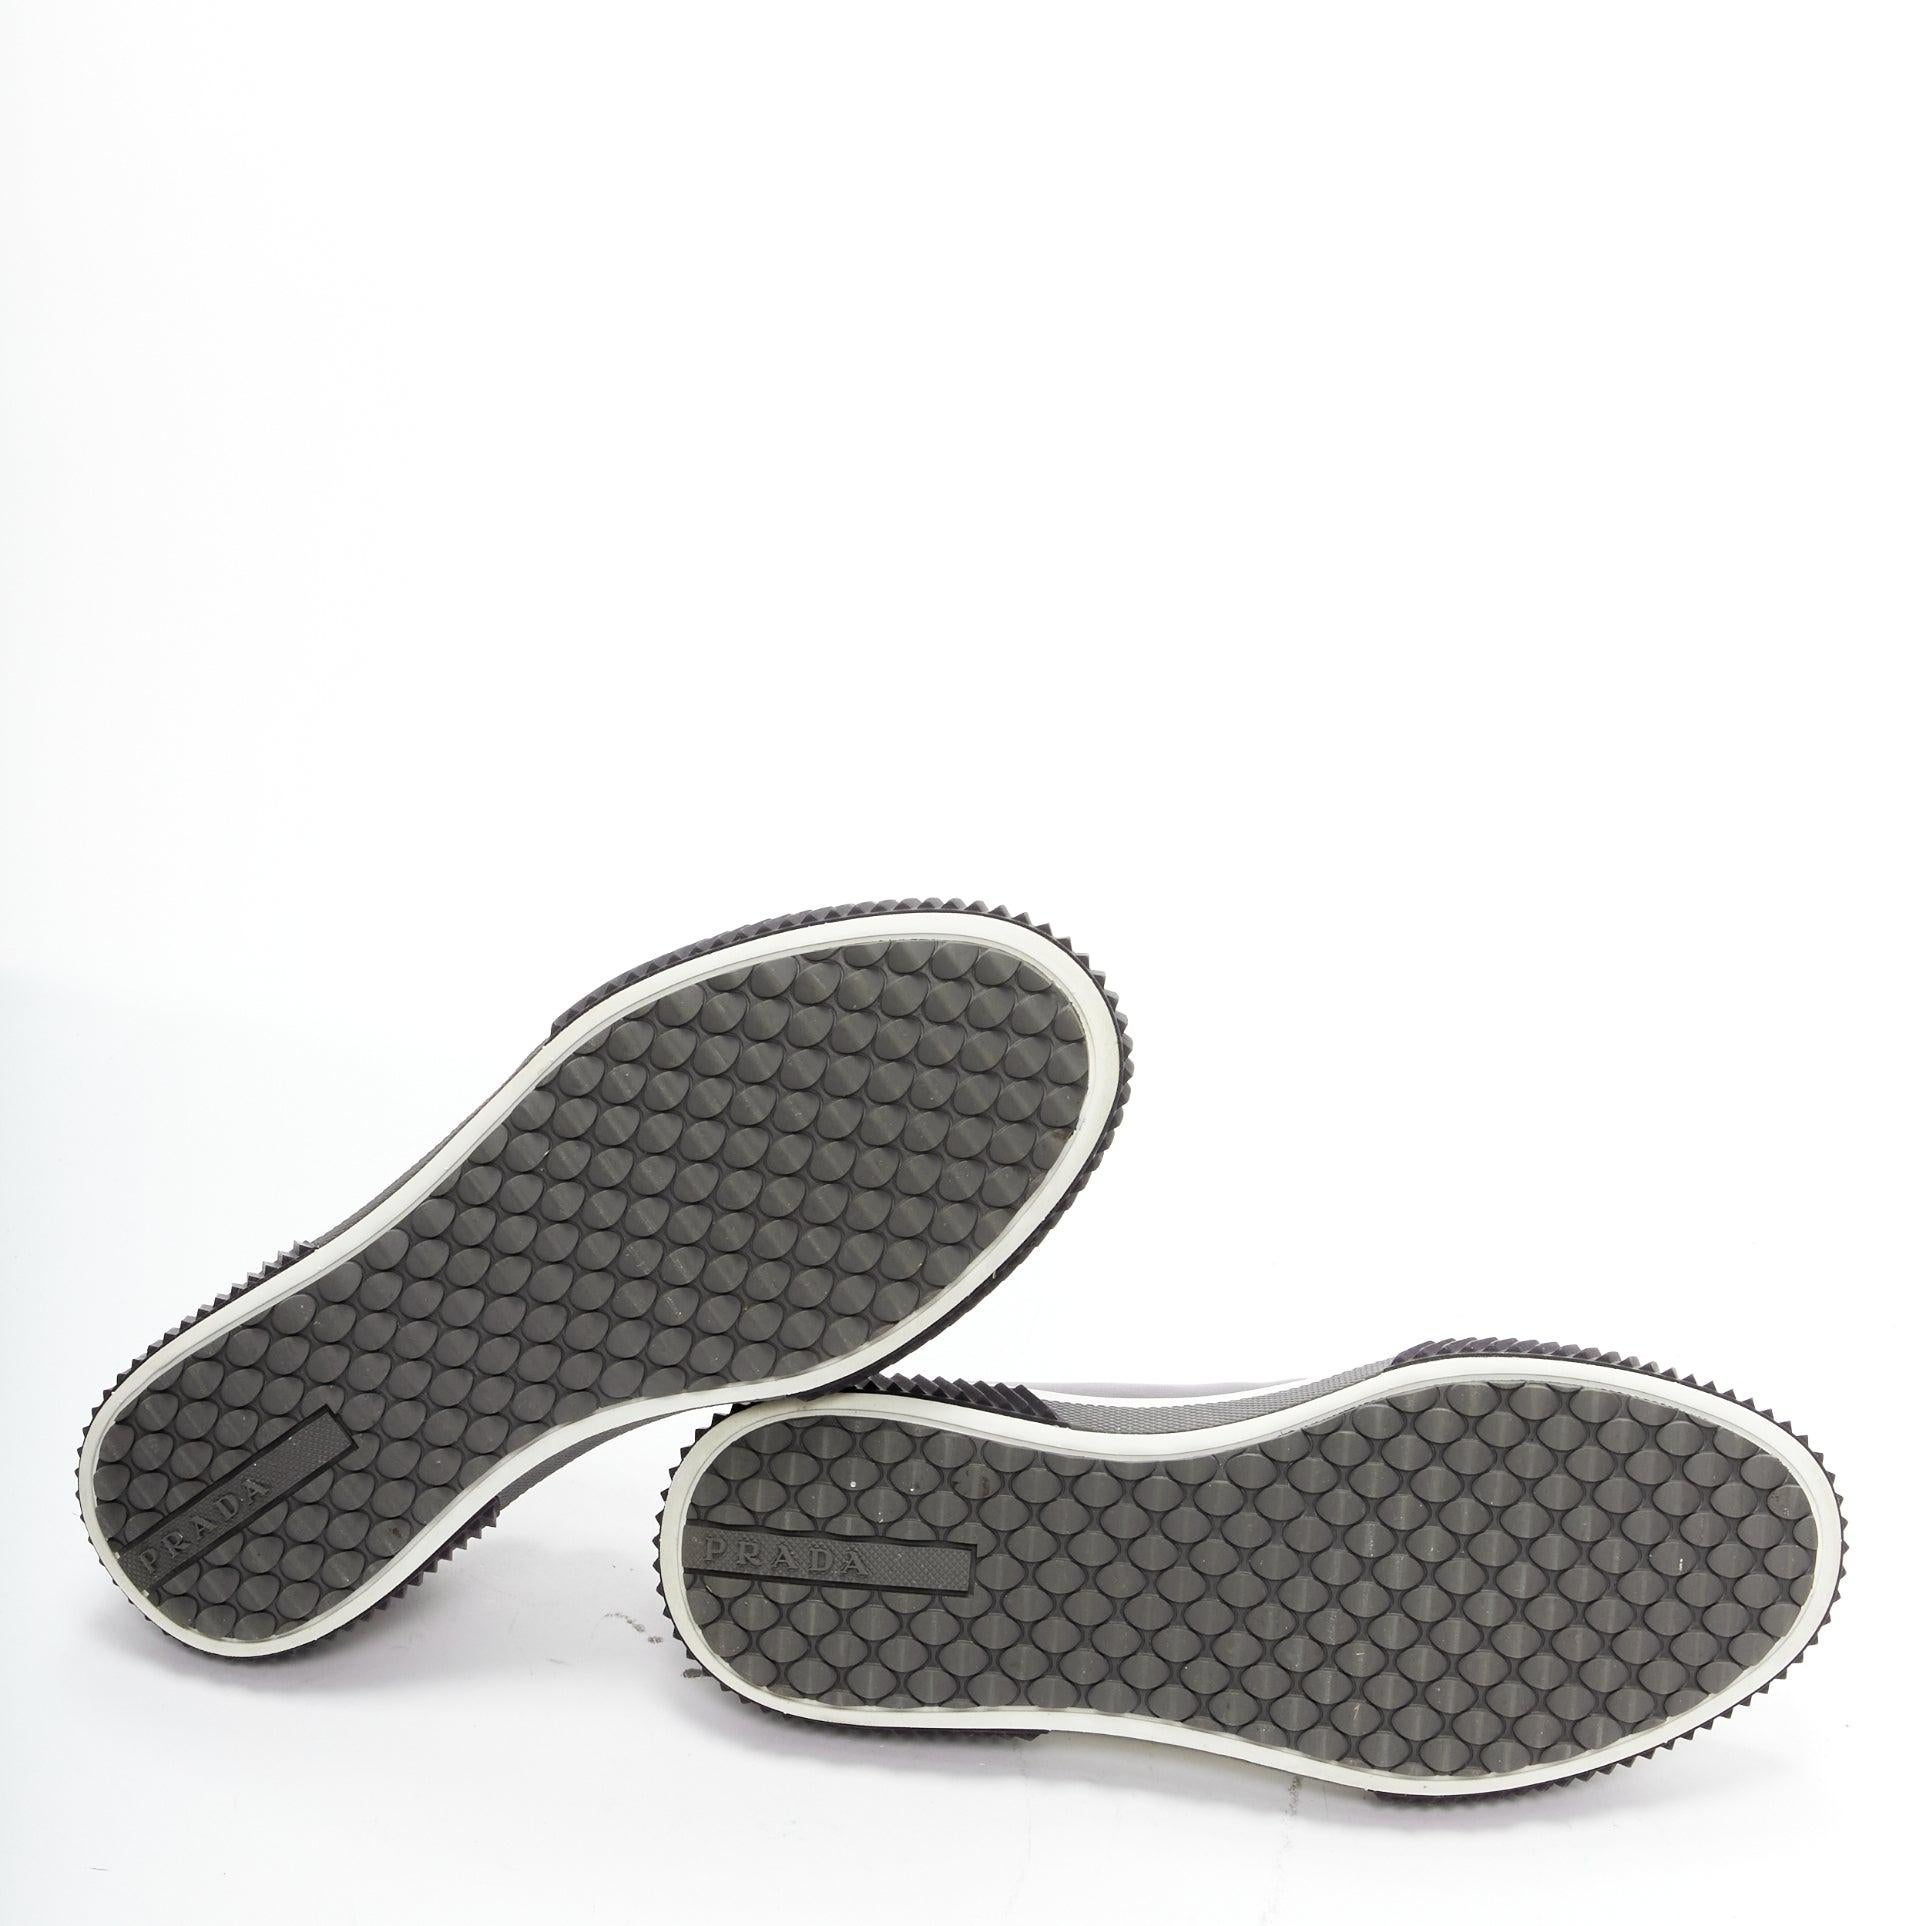 PRADA Stratus black grey suede leather low top sneakers UK5.5 EU39.5 For Sale 6